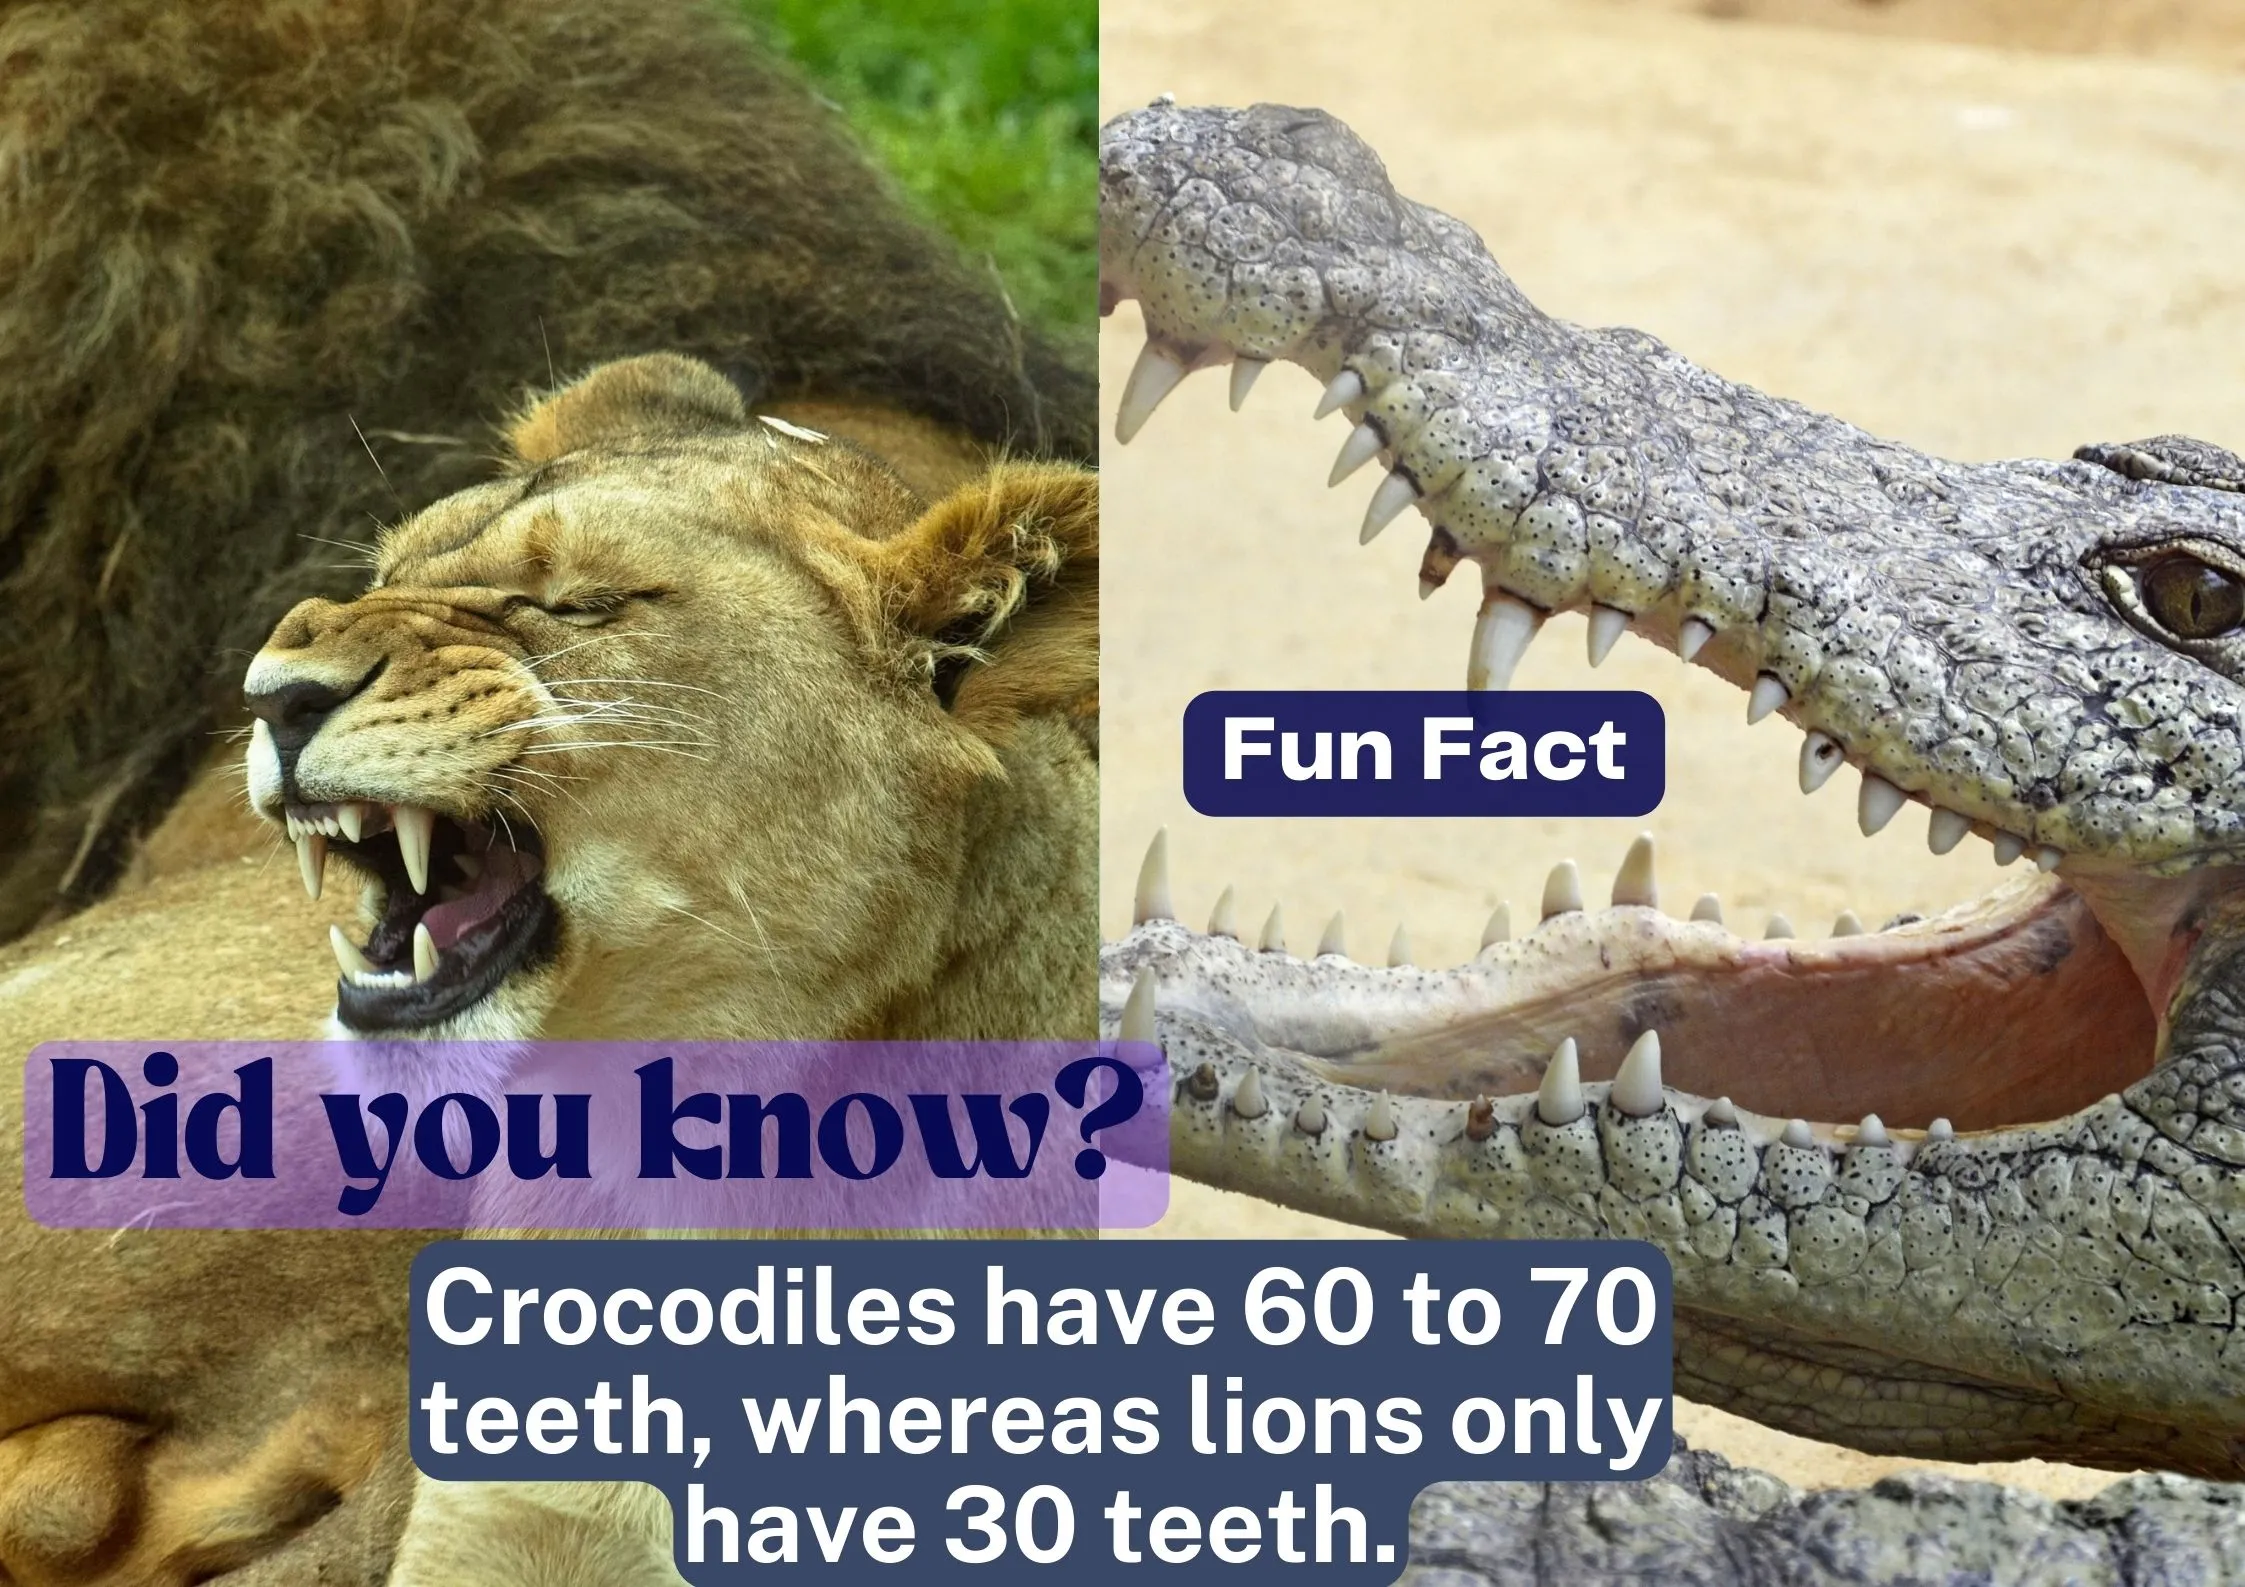 Do crocodiles eat lions?